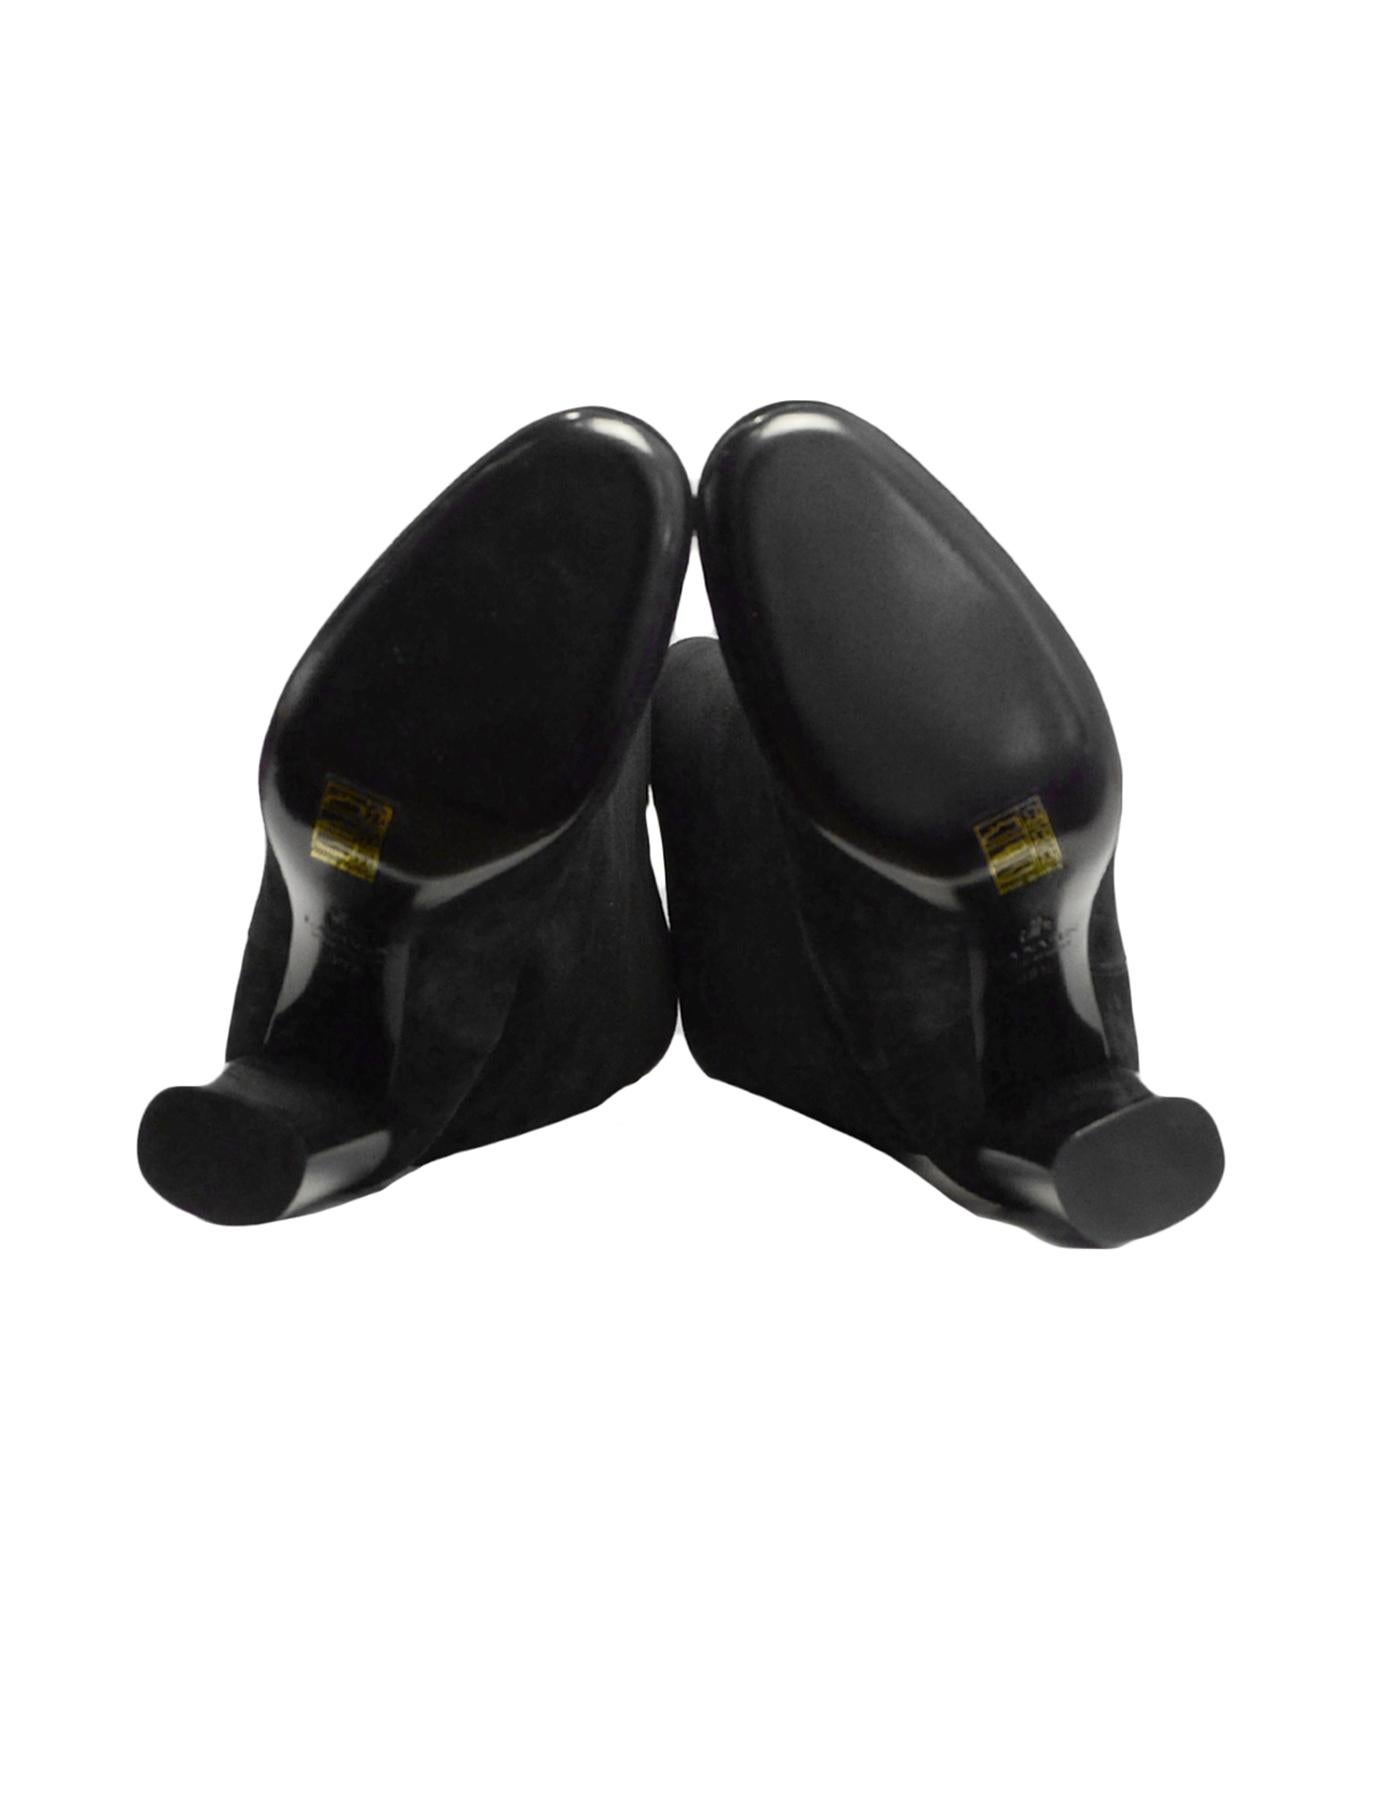 Lanvin Black Suede Knee-High Boots sz 39.5  4